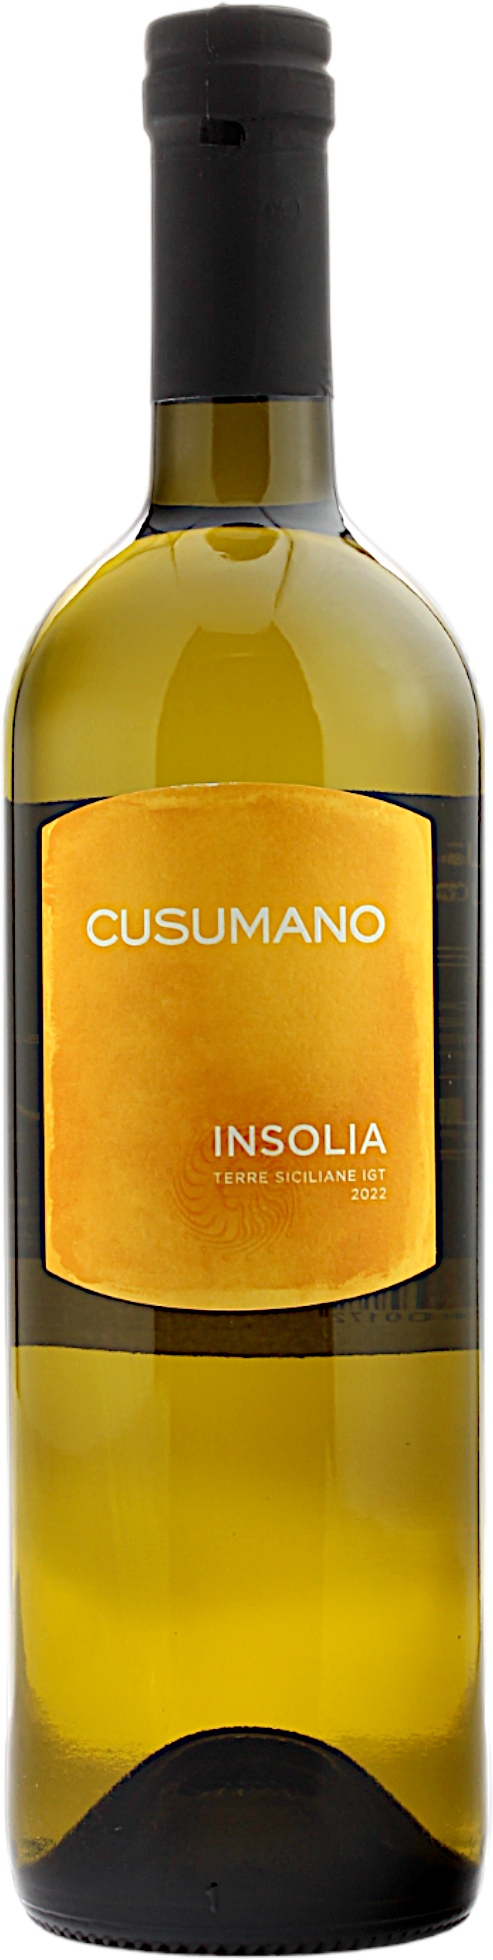 Cusumano Insolia Terre Siciliane IGT 12.0% 0,75l